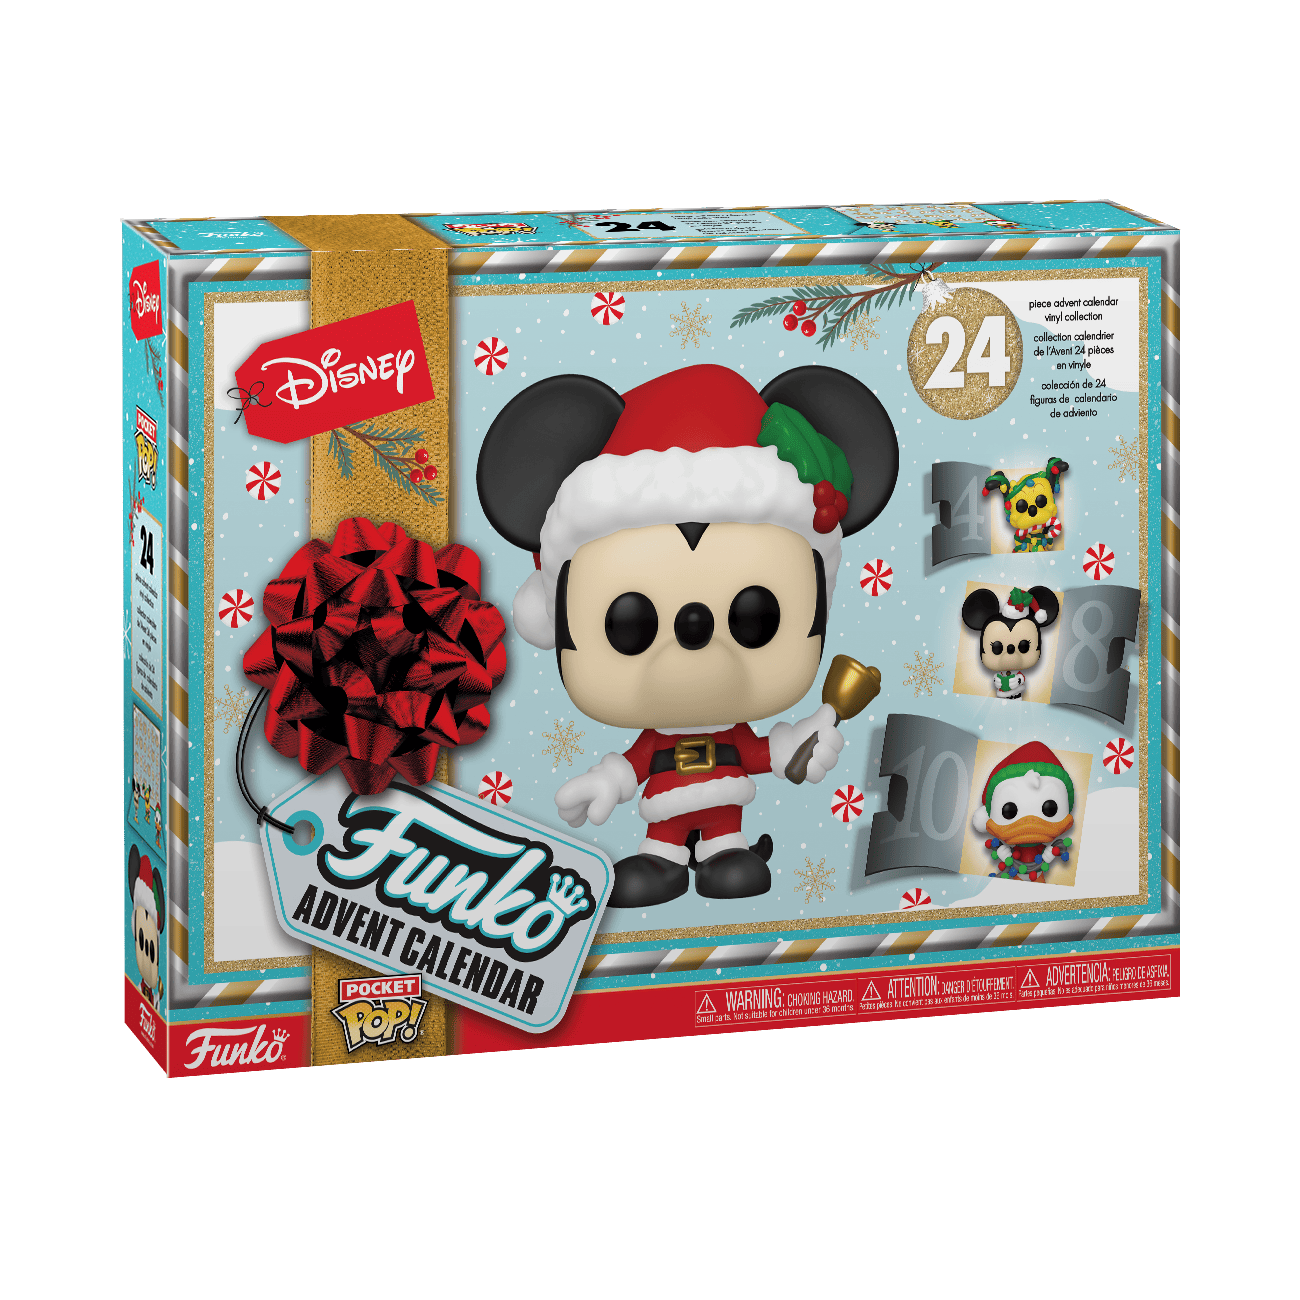 Buy Pocket Pop! Disney 24Day Holiday Advent Calendar at Funko.